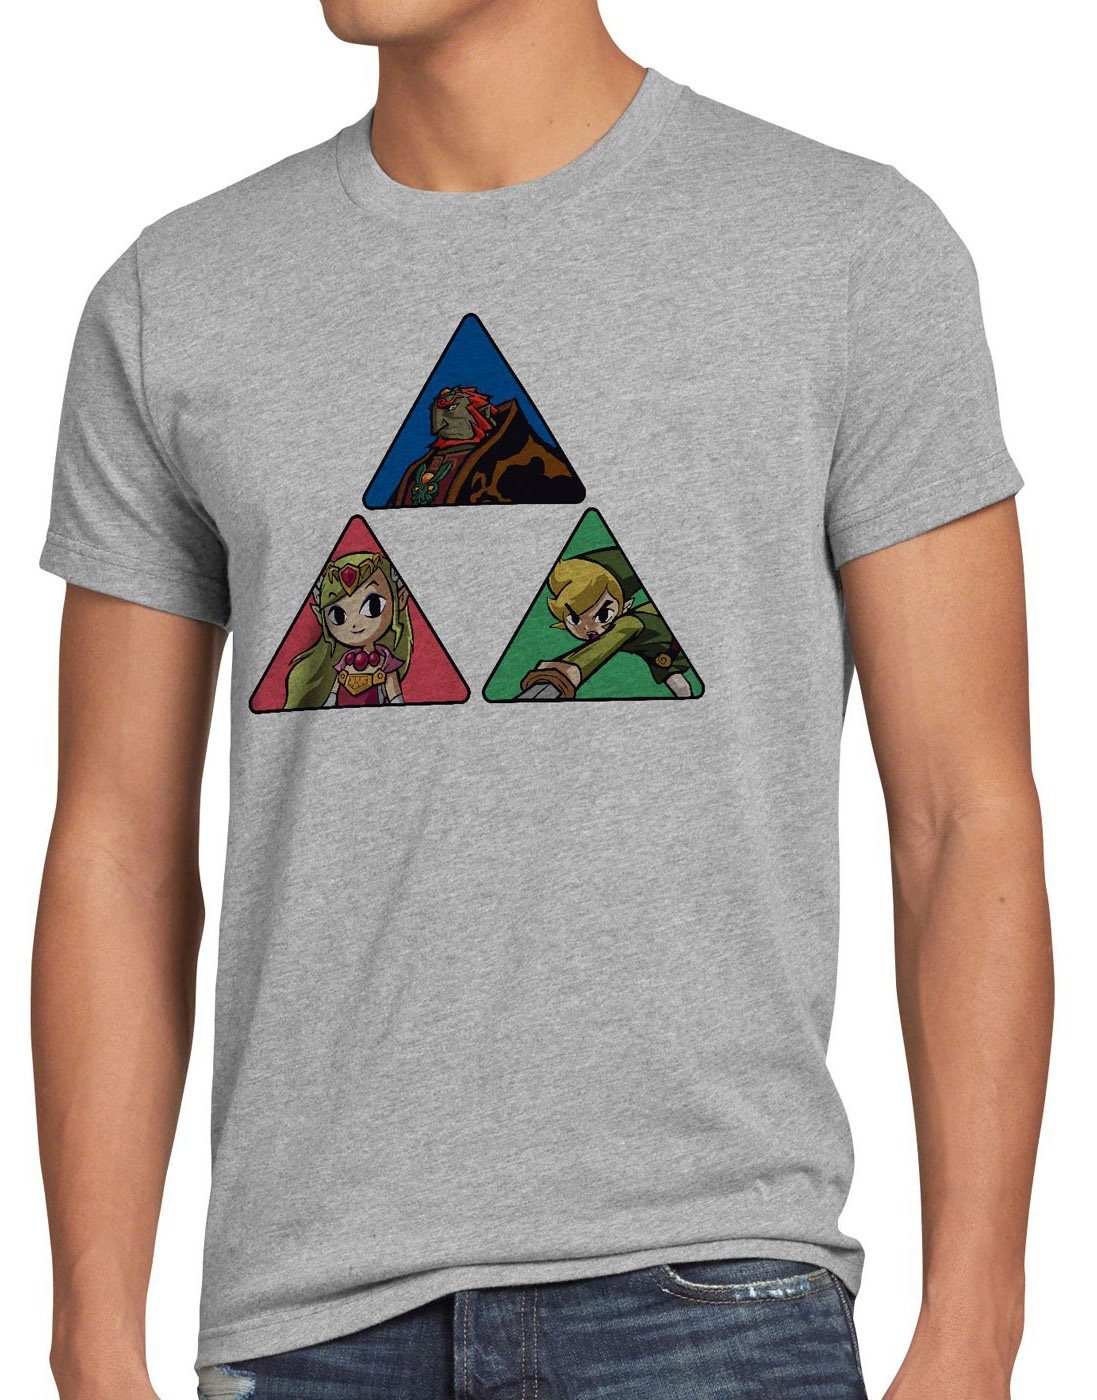 of Link Herren Hyrule grau boy meliert wild T-Shirt game breath Print-Shirt style3 Gamer Triforce zelda legend